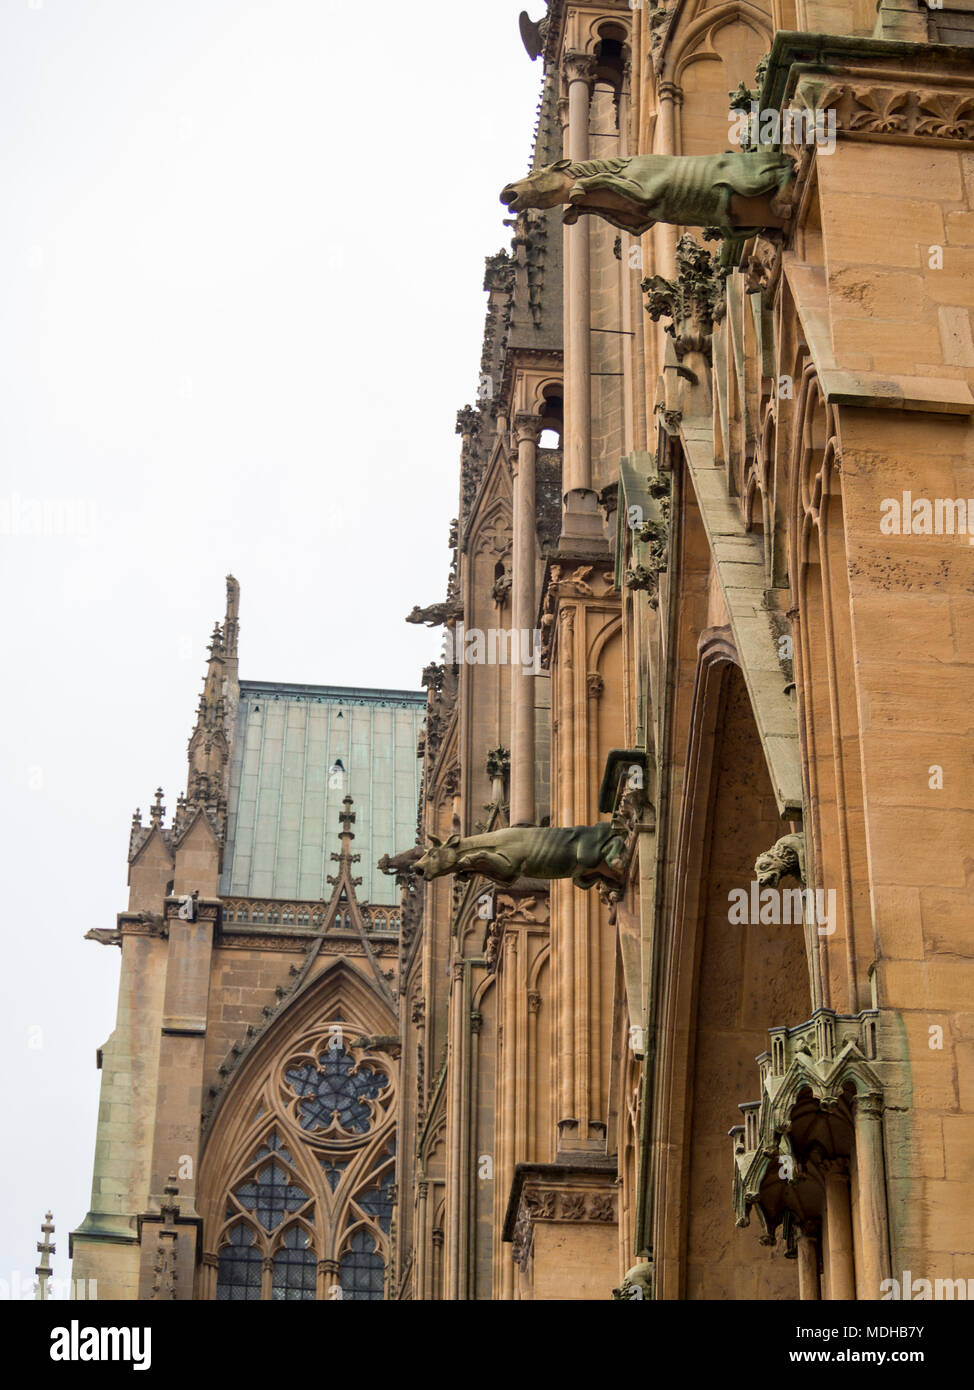 Detalle de la fachada de la catedral de Saint-Etienne, Metz Foto de stock